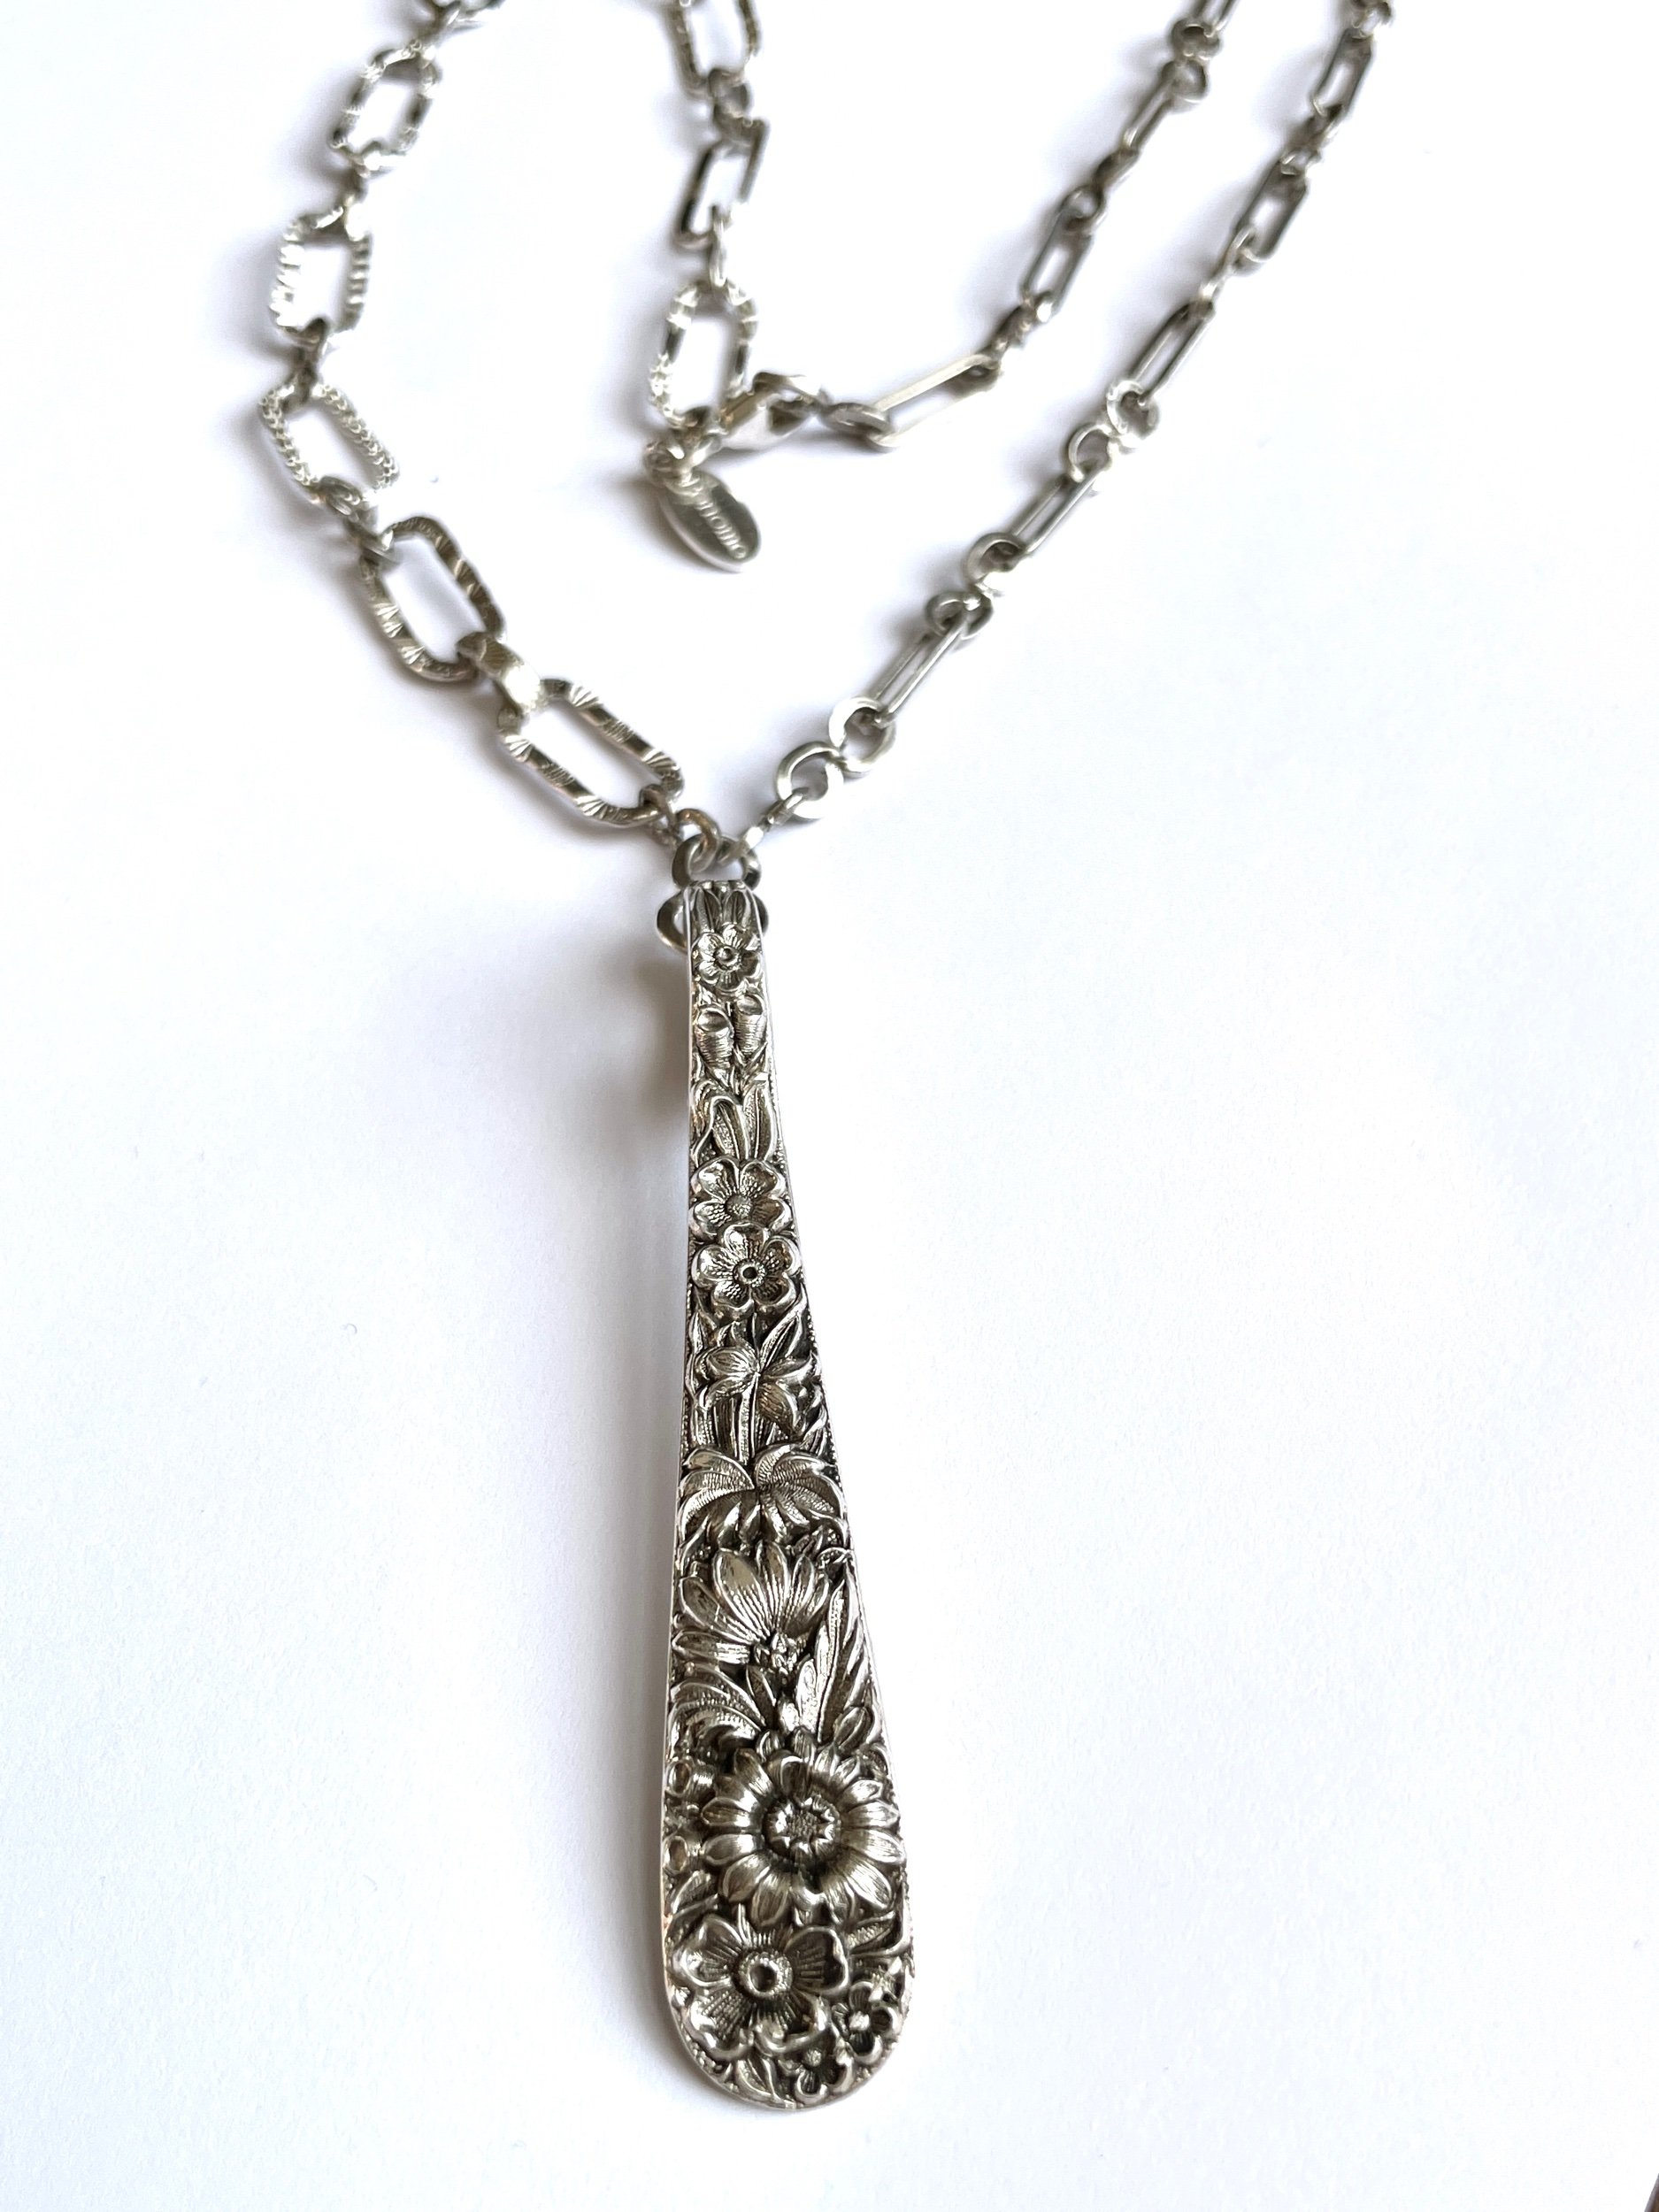 Floral Spoon Necklace N12 detail.jpeg